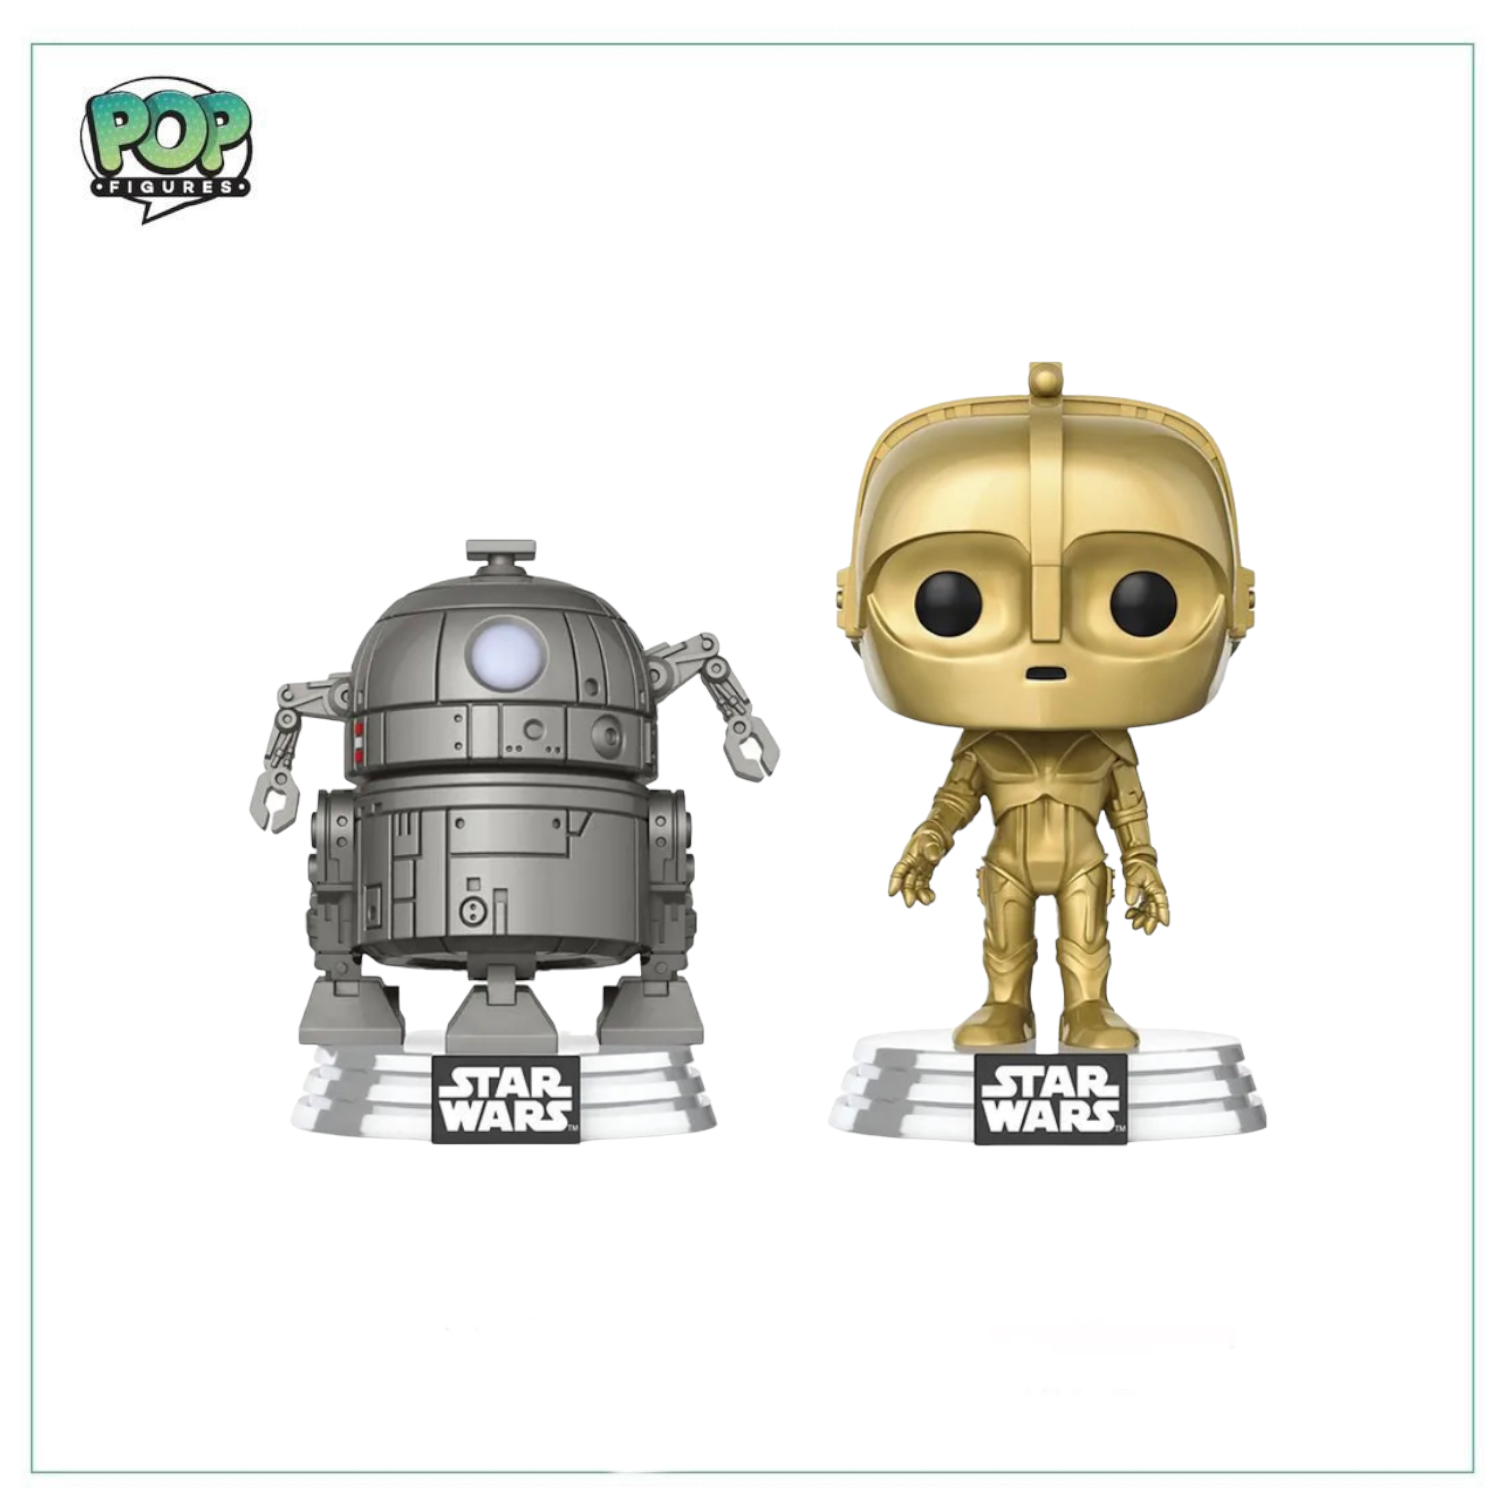 C-3PO & R2-D2 Deluxe Funko 2 Pack! Star Wars - Disney Exclusive